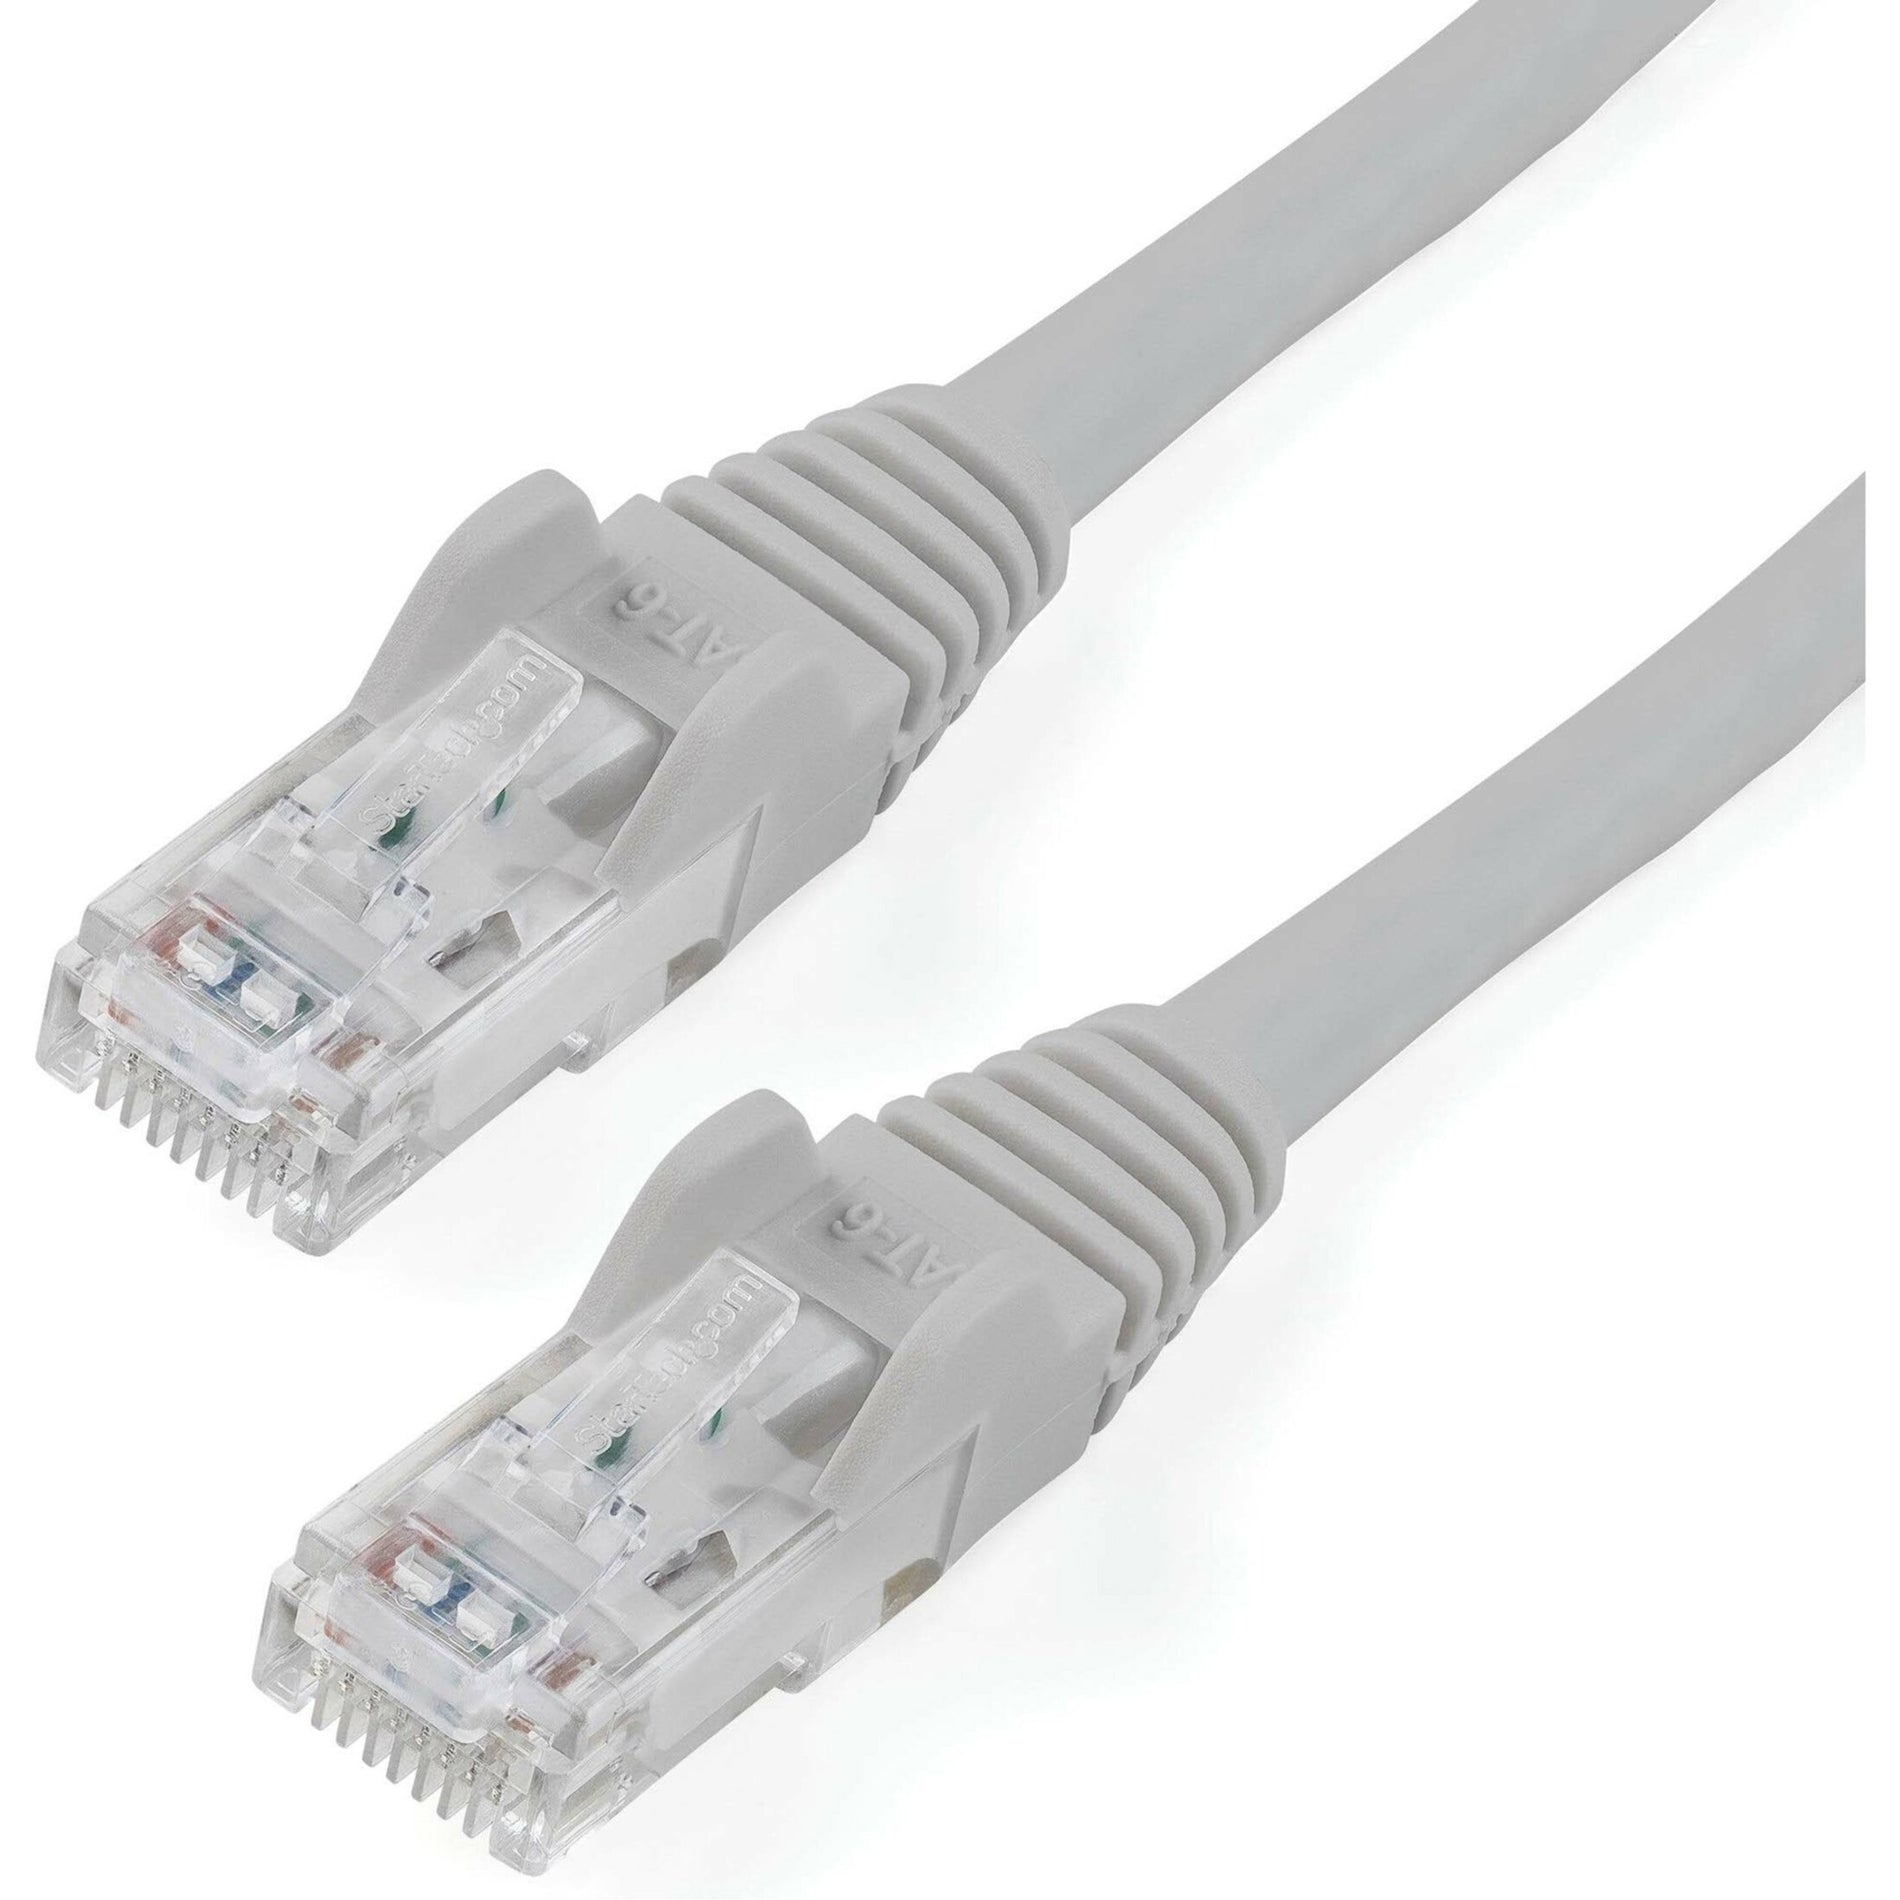 StarTech.com N6PATCH125GR Cable de conexión Cat6 con conectores RJ45 sin enganches: cable Ethernet largo de 125 ft cable UTP Cat 6 gris. La marca es StarTech.com. Traduce la marca.